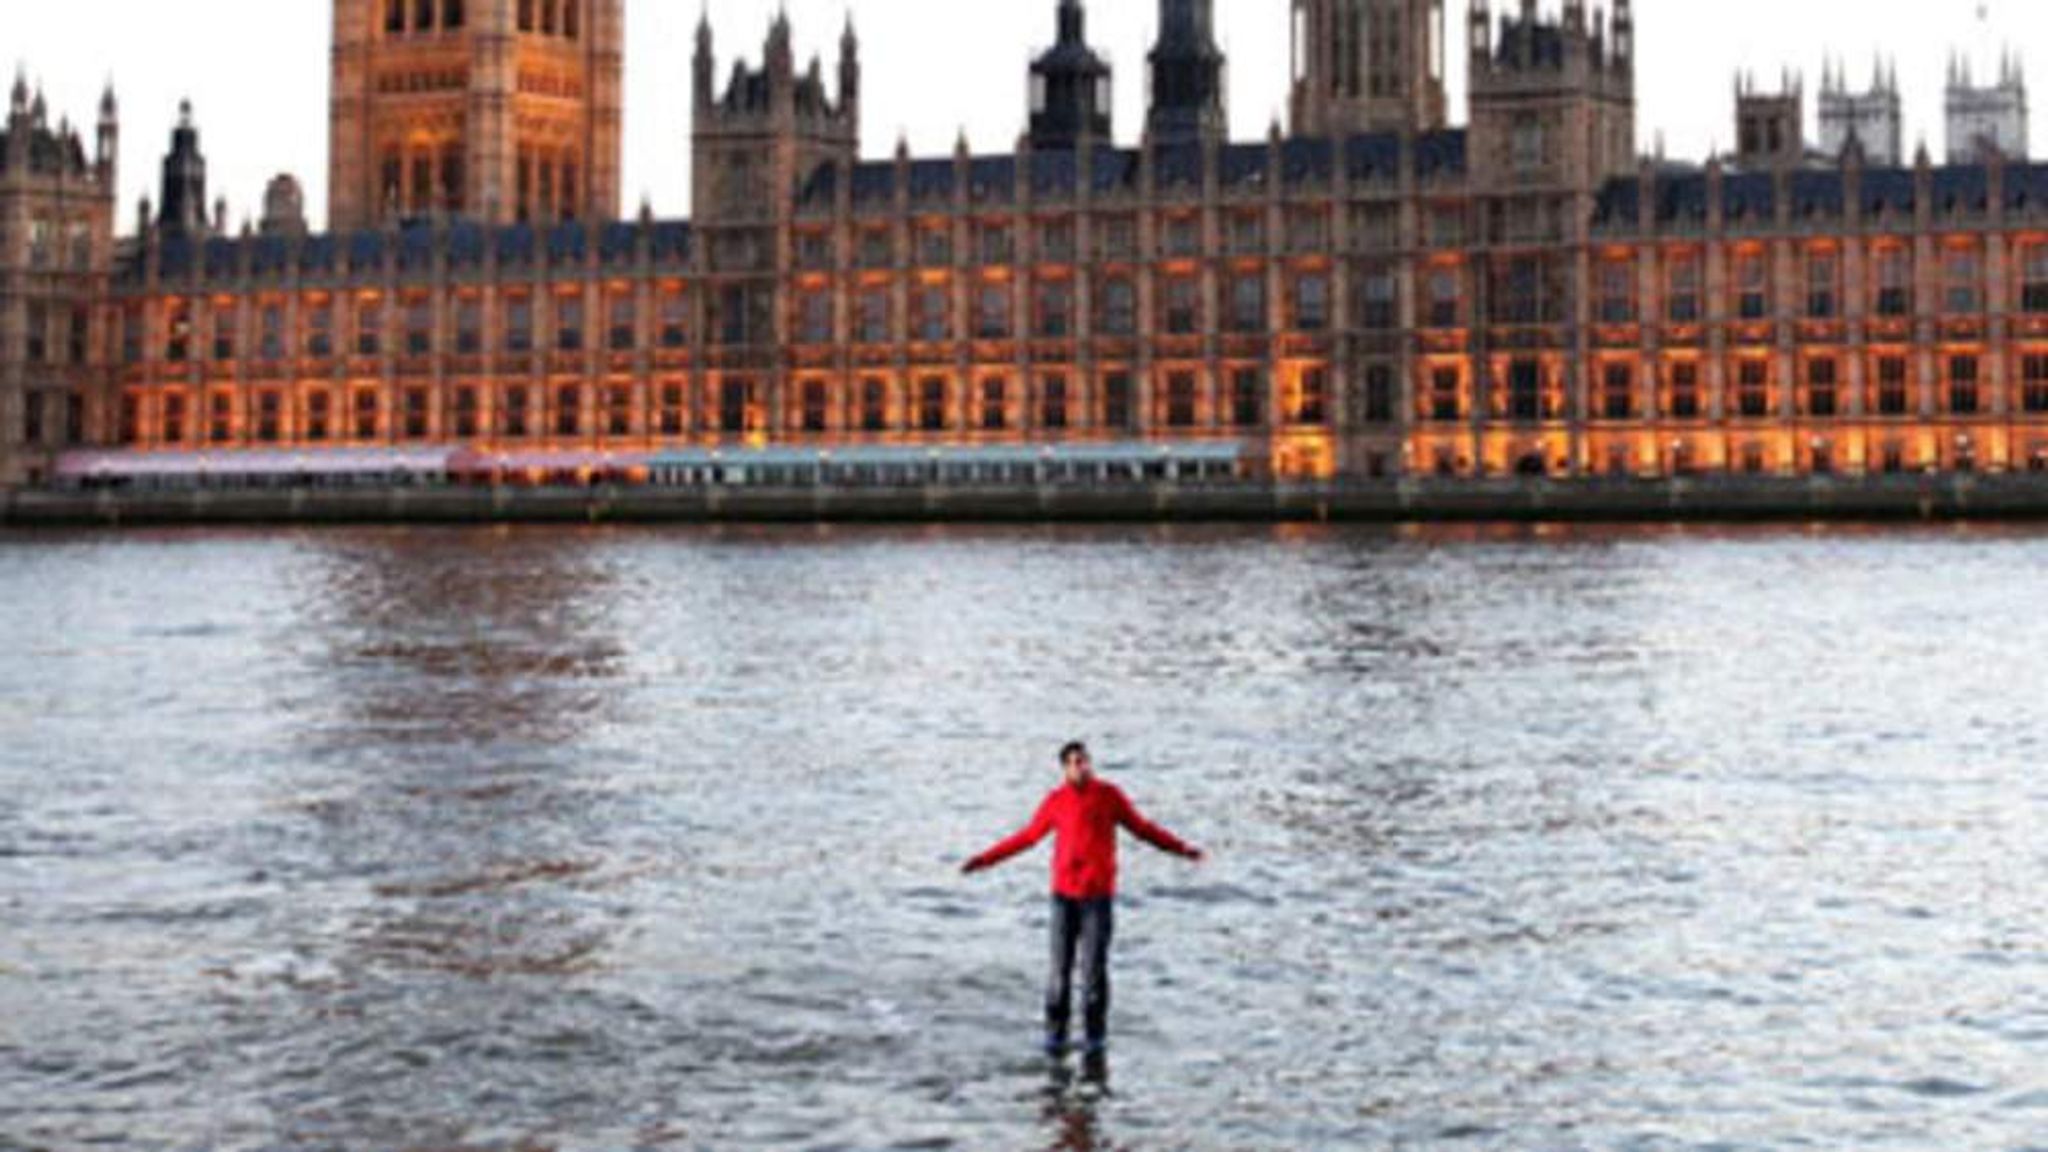 Dræbte Kæmpe stor chef Is Magician's 'Walk On Water' Genuine? | Ents & Arts News | Sky News